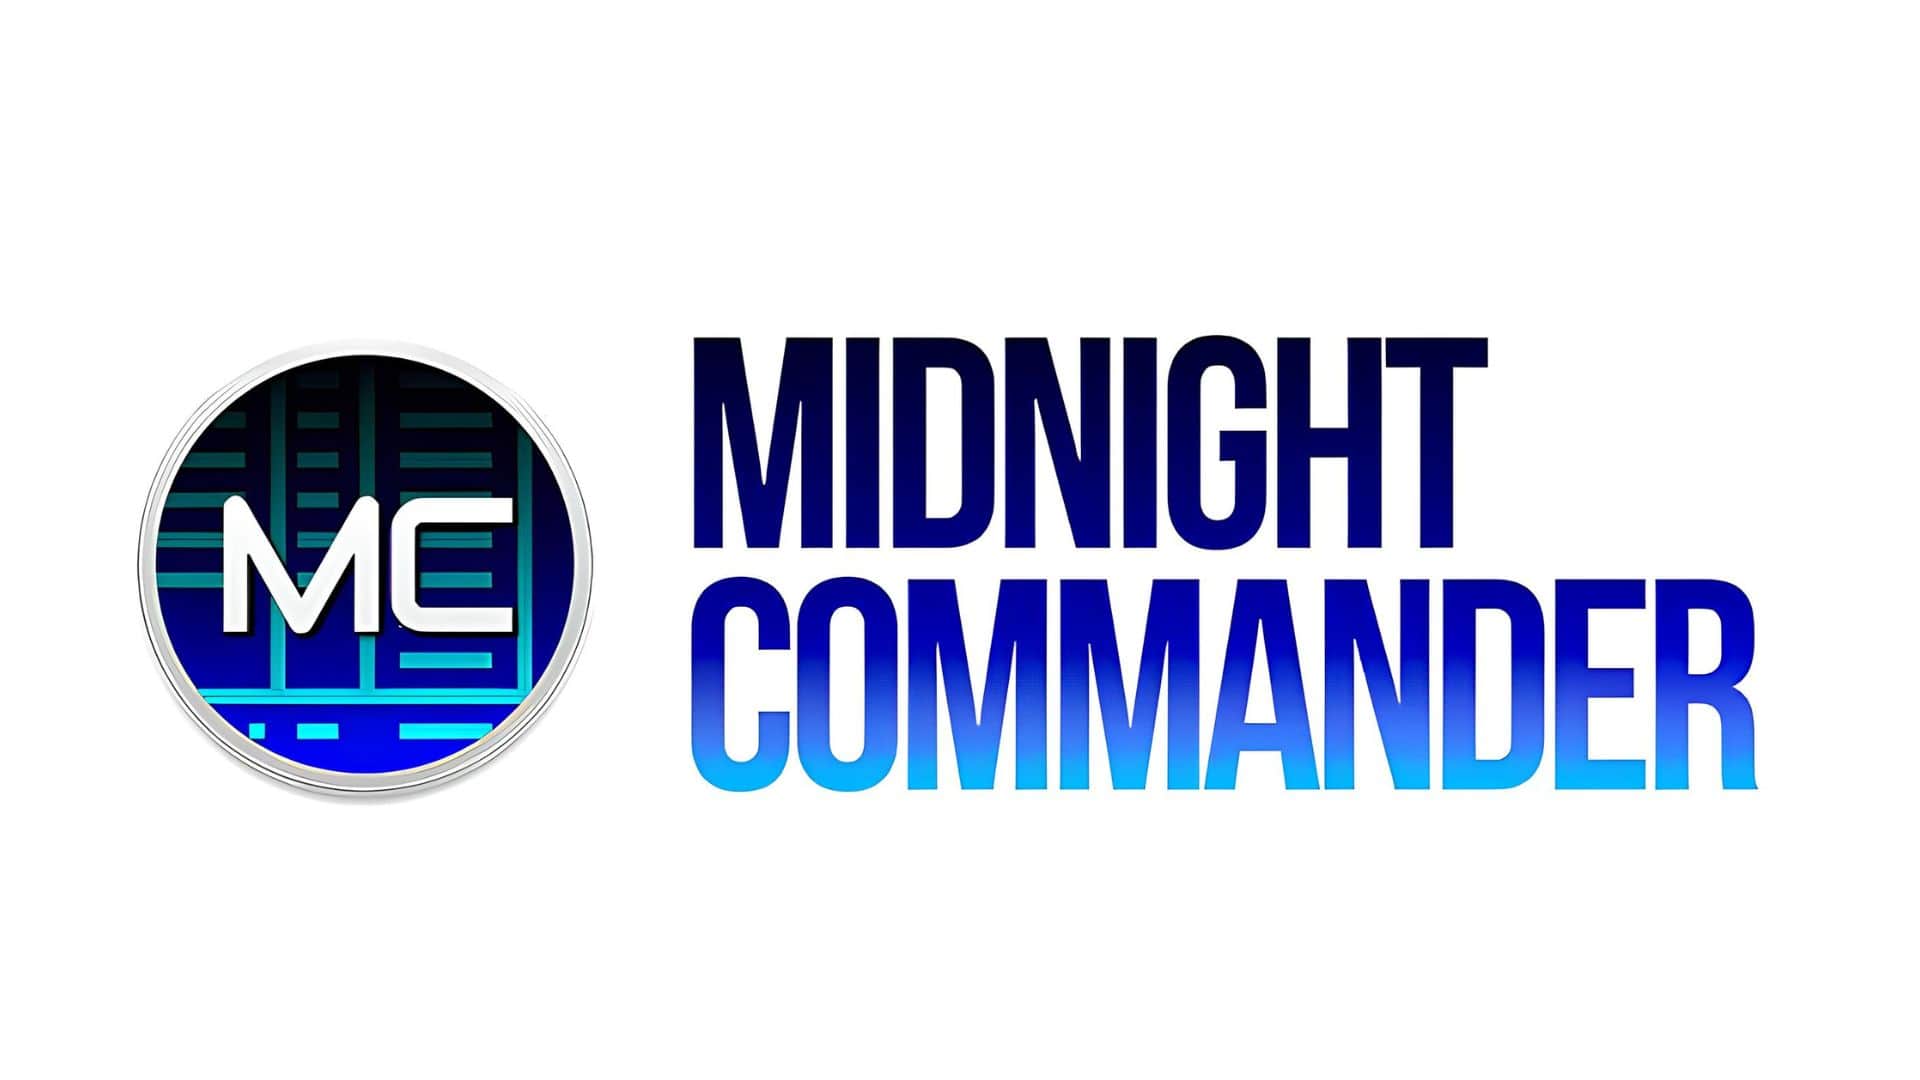 How To Install Midnight Commander On Linux: Ubuntu, Debian, RHEL, CentOS, Arch Linux, etc.